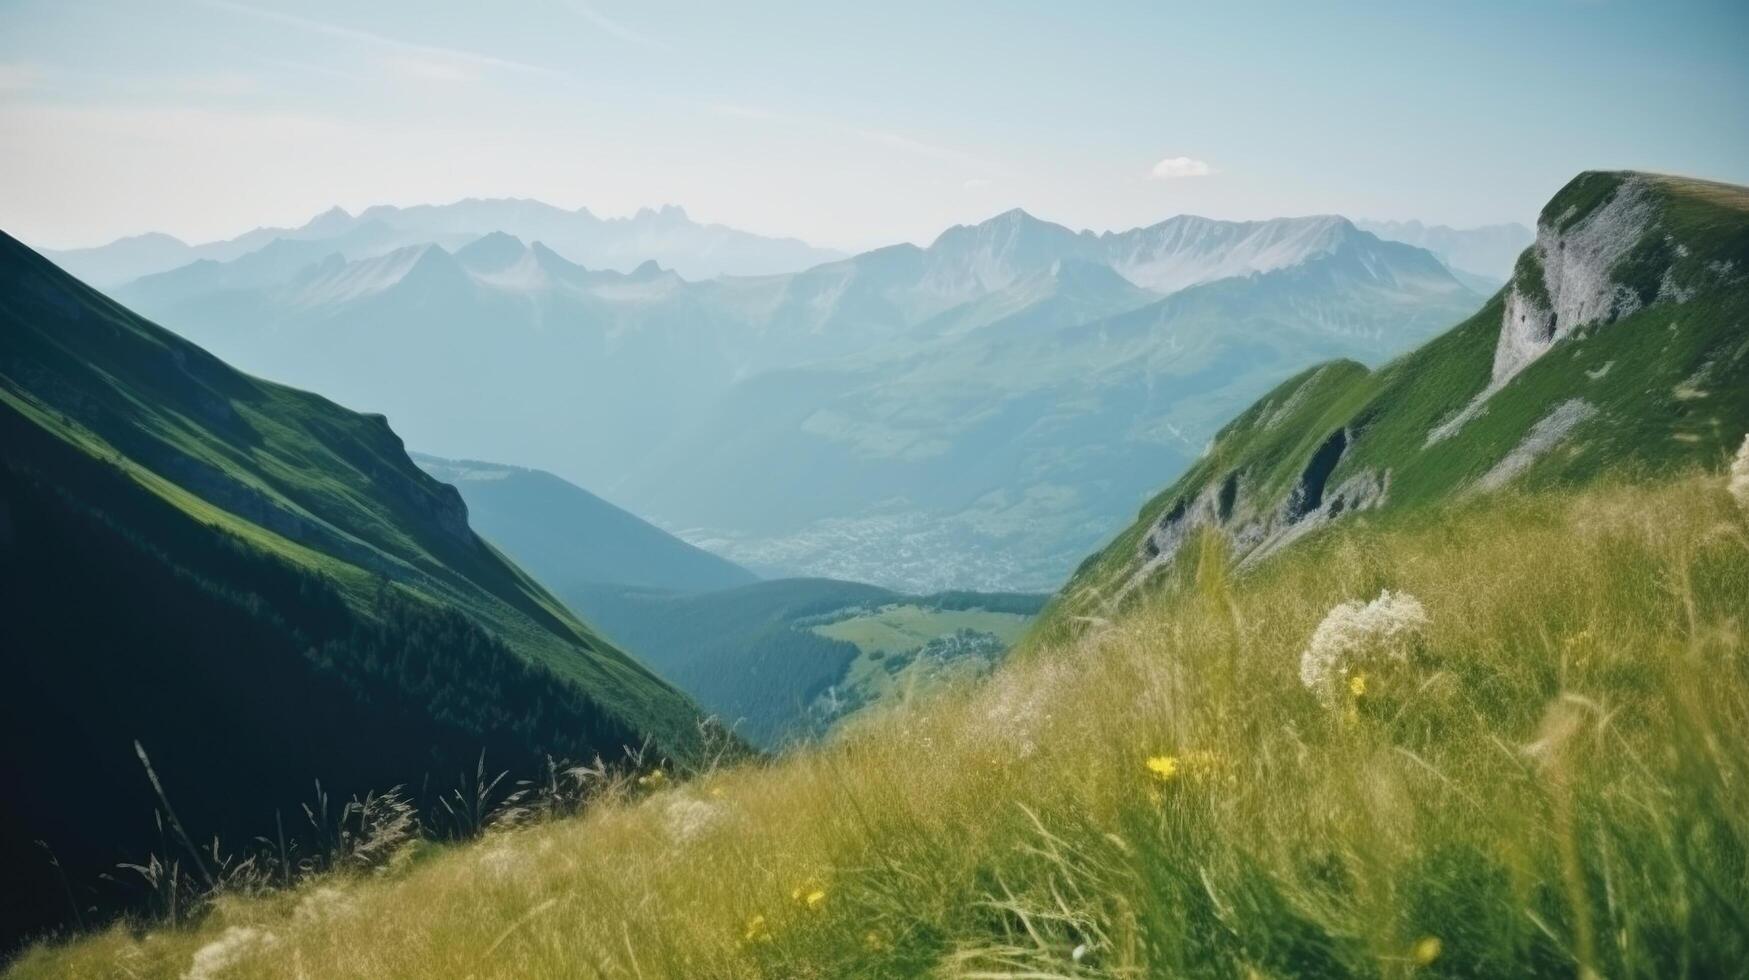 Alps summer background. Illustration photo